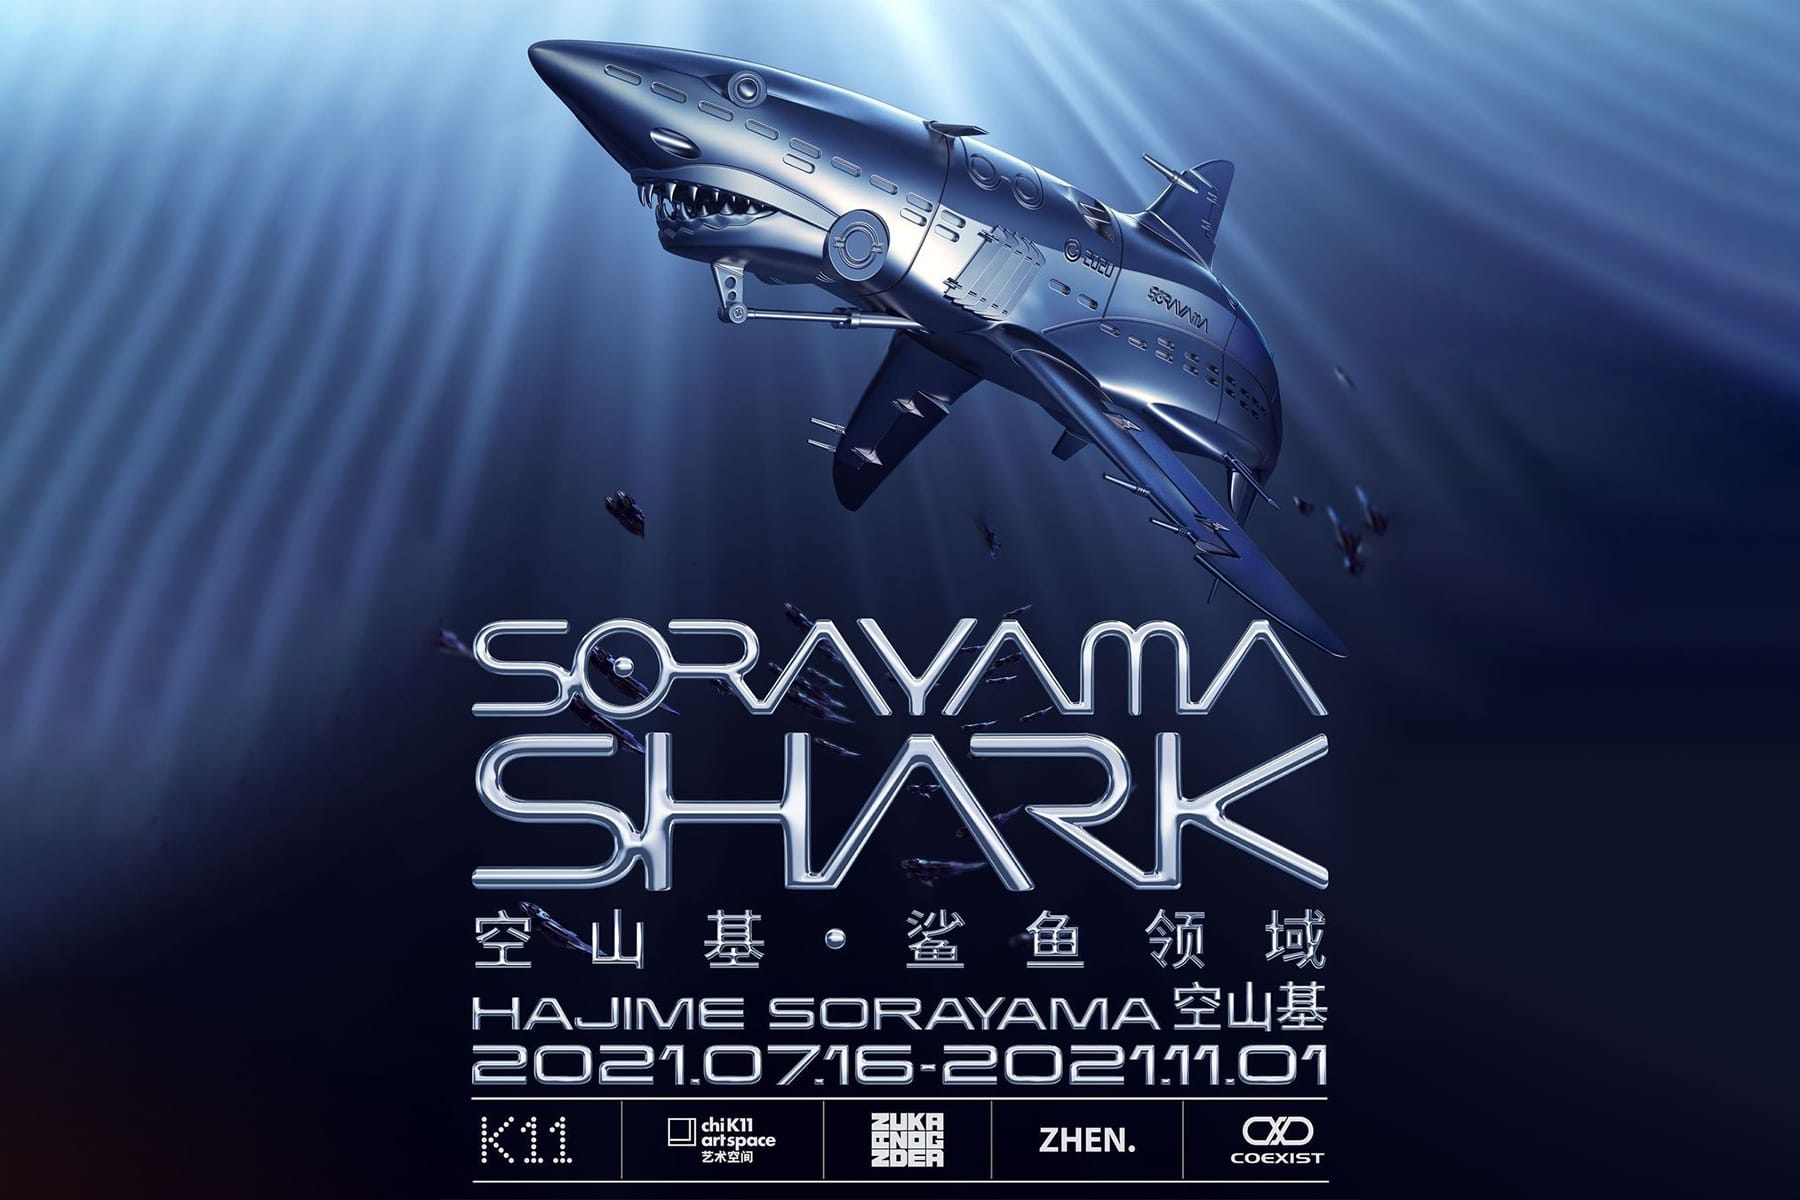 空山基Hajime Sorayama 最新沈浸式個展《SORAYAMA SHARK》正式開催 